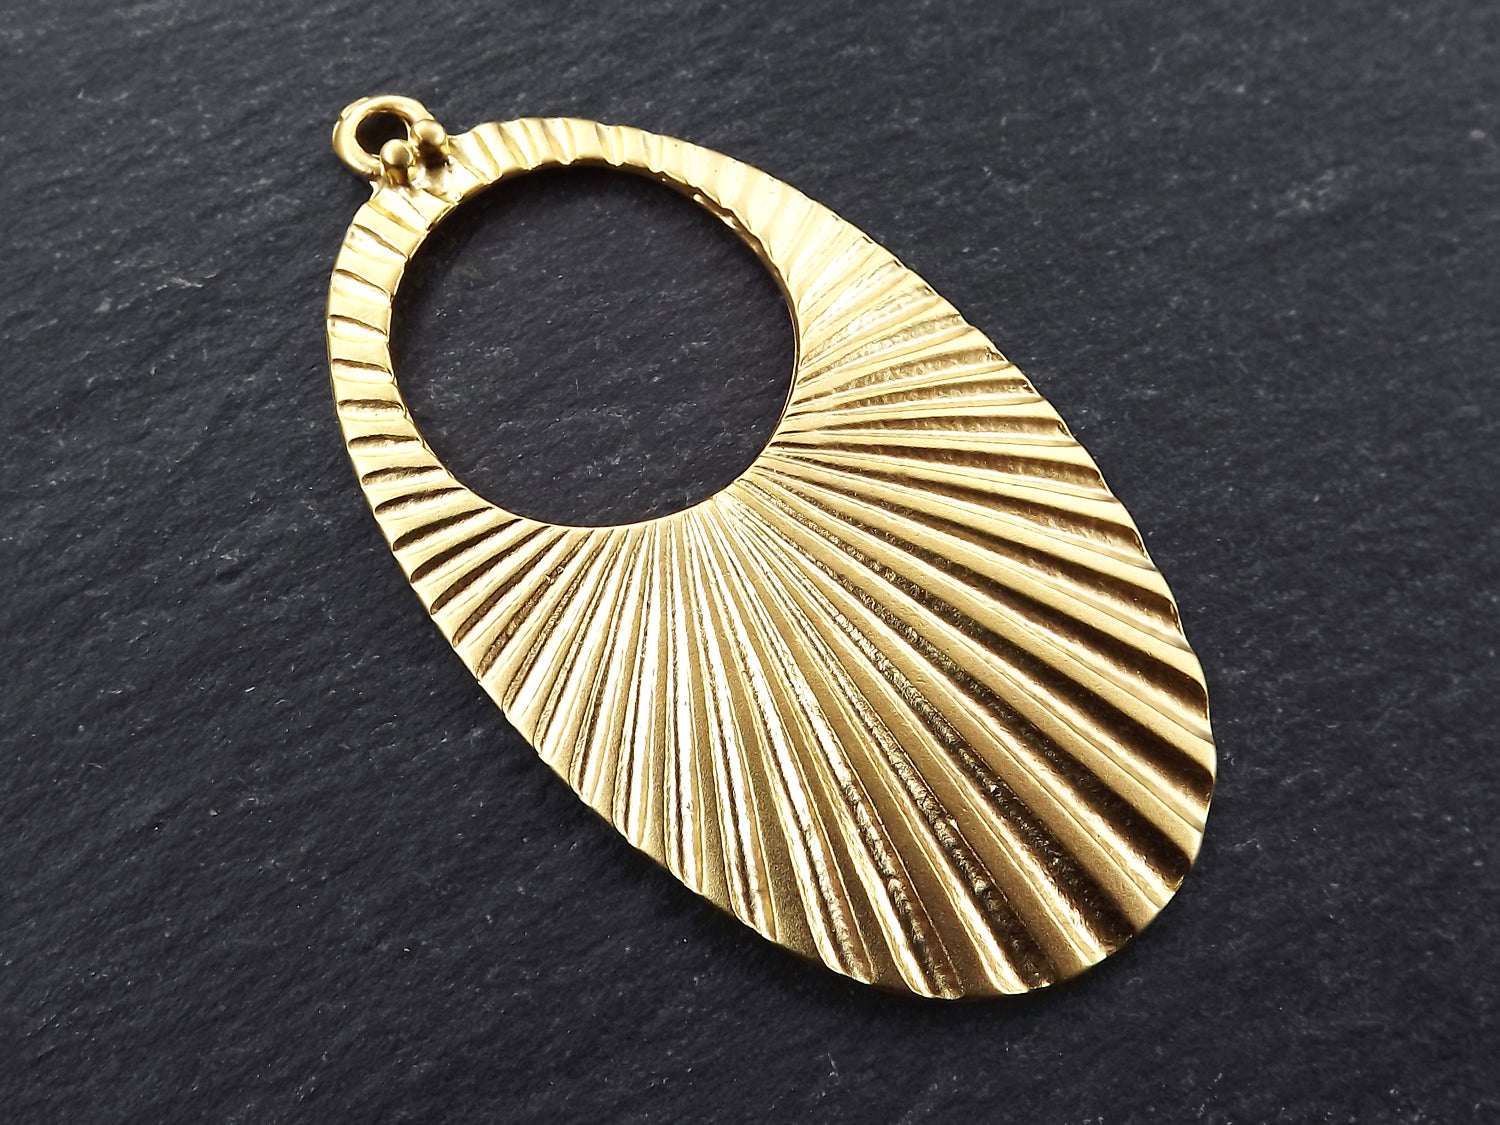 Corrugated Pendant, Oval Earring Pendant, Oval Pendant, Art Deco, Minimalist, Sun Ray Pendant, Gold Pendant, 22k Matte Gold, 1pc